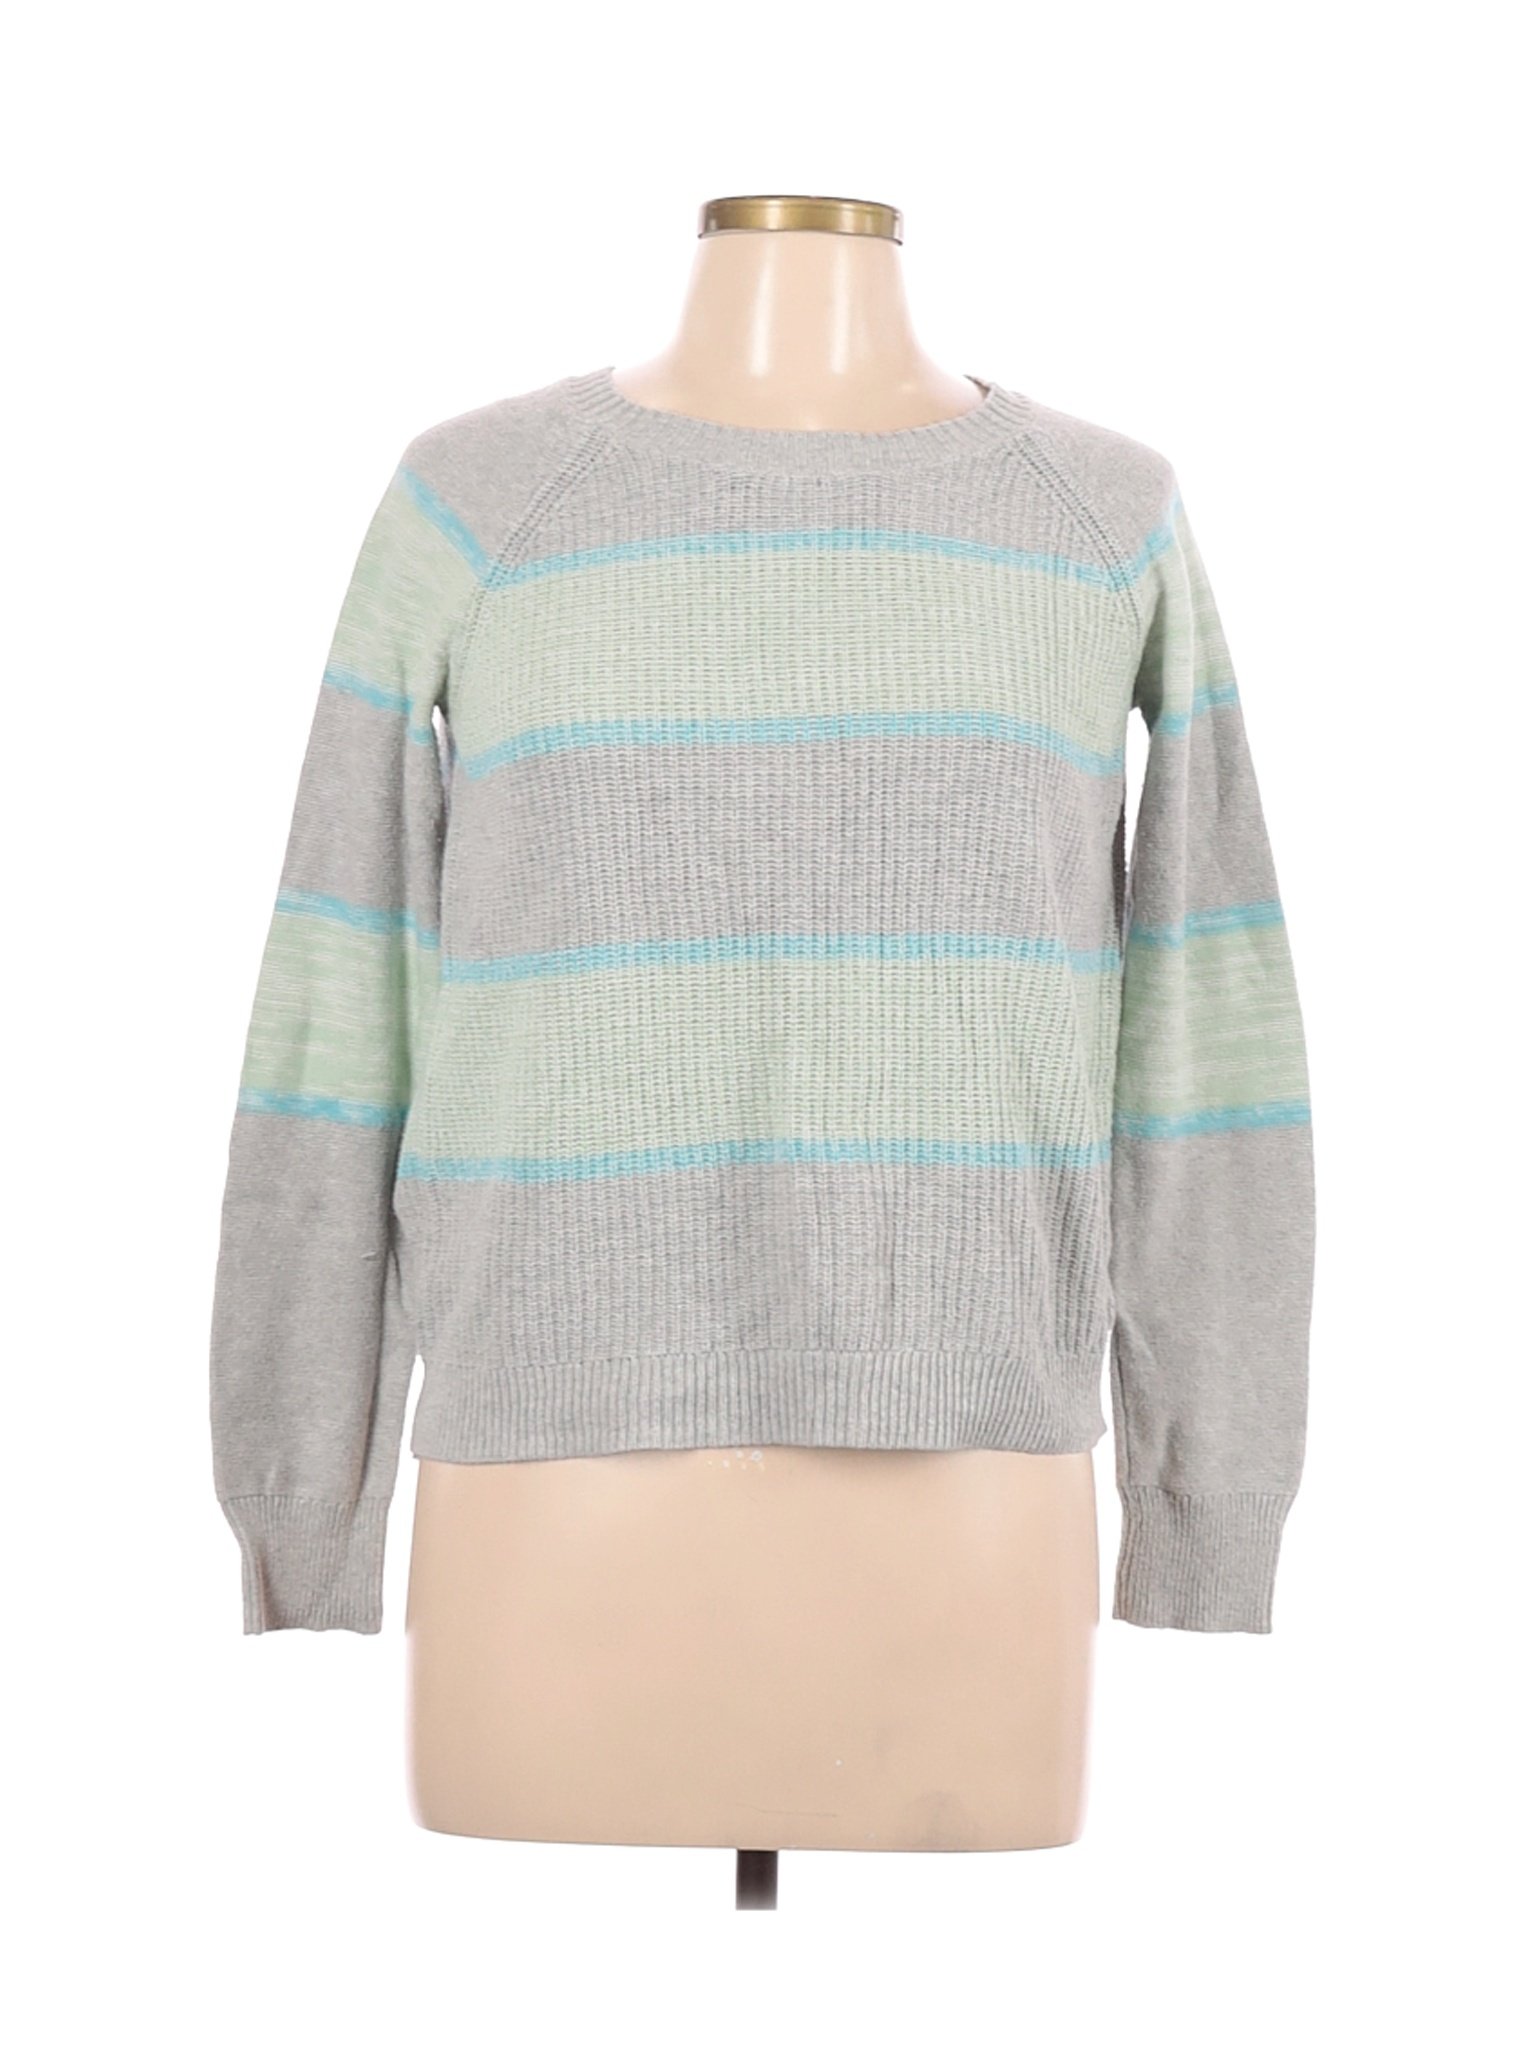 Mossimo Supply Co. Women Gray Pullover Sweater M | eBay